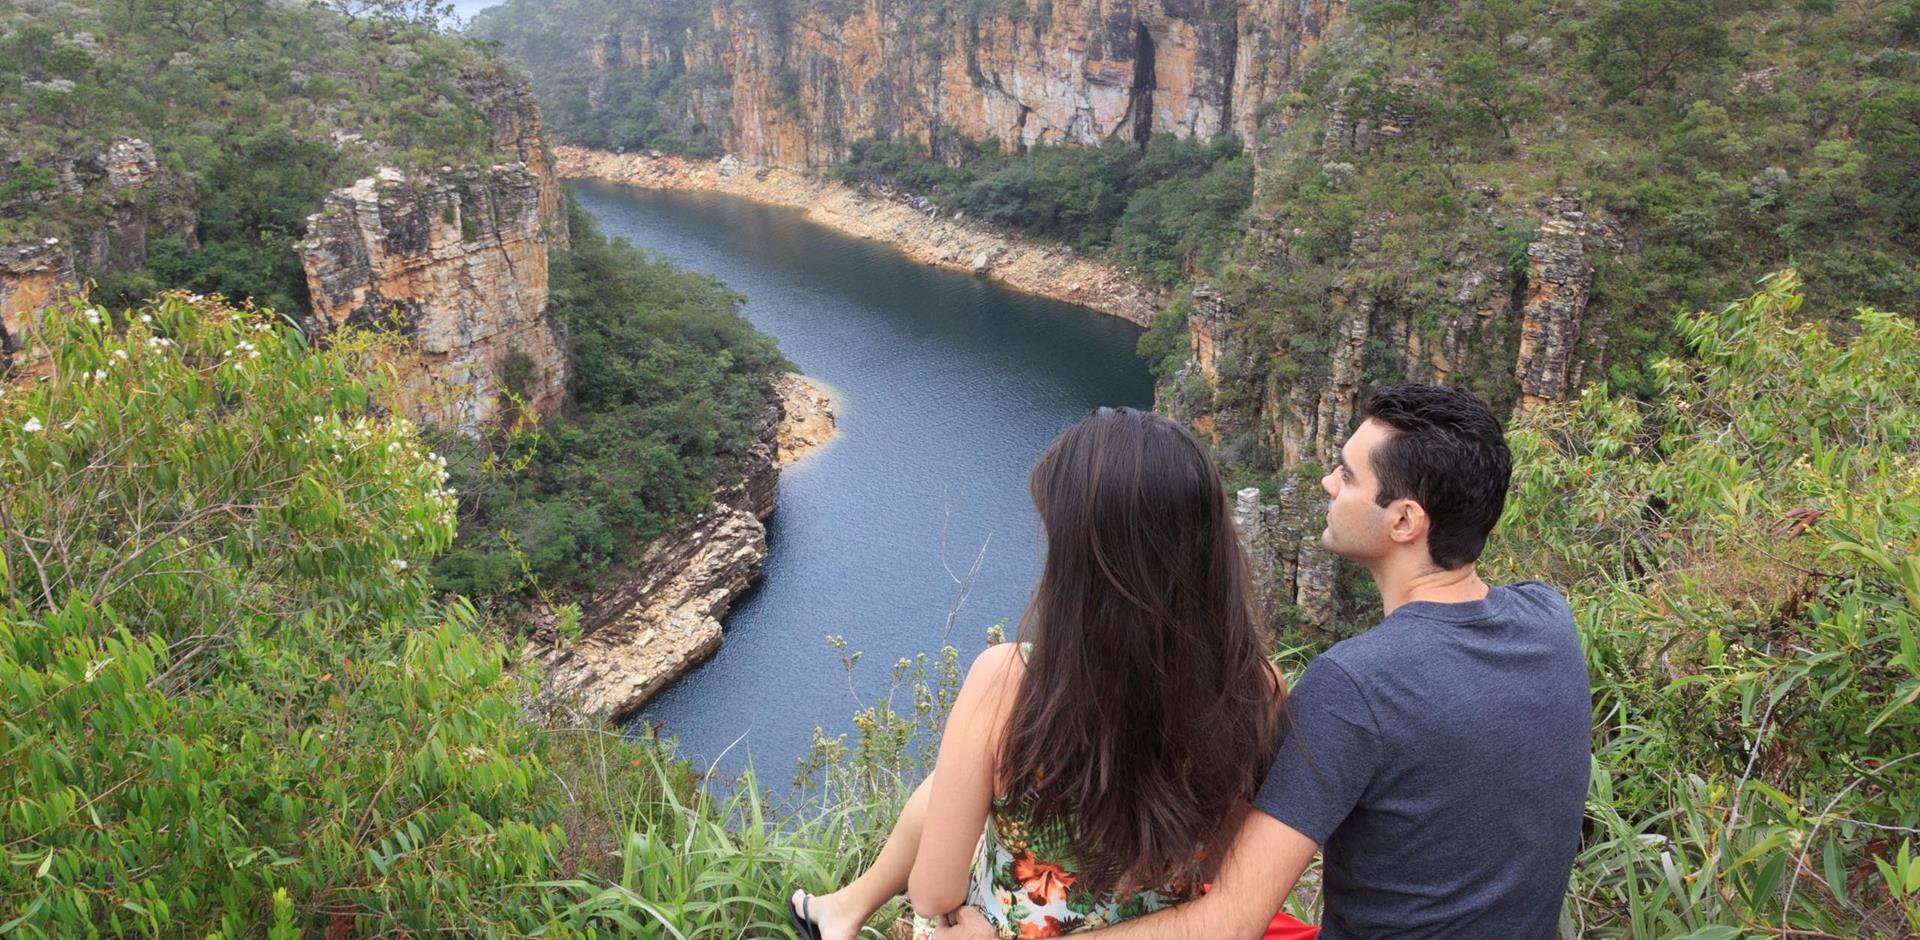 Honeymoon couple looking down upon a ravine